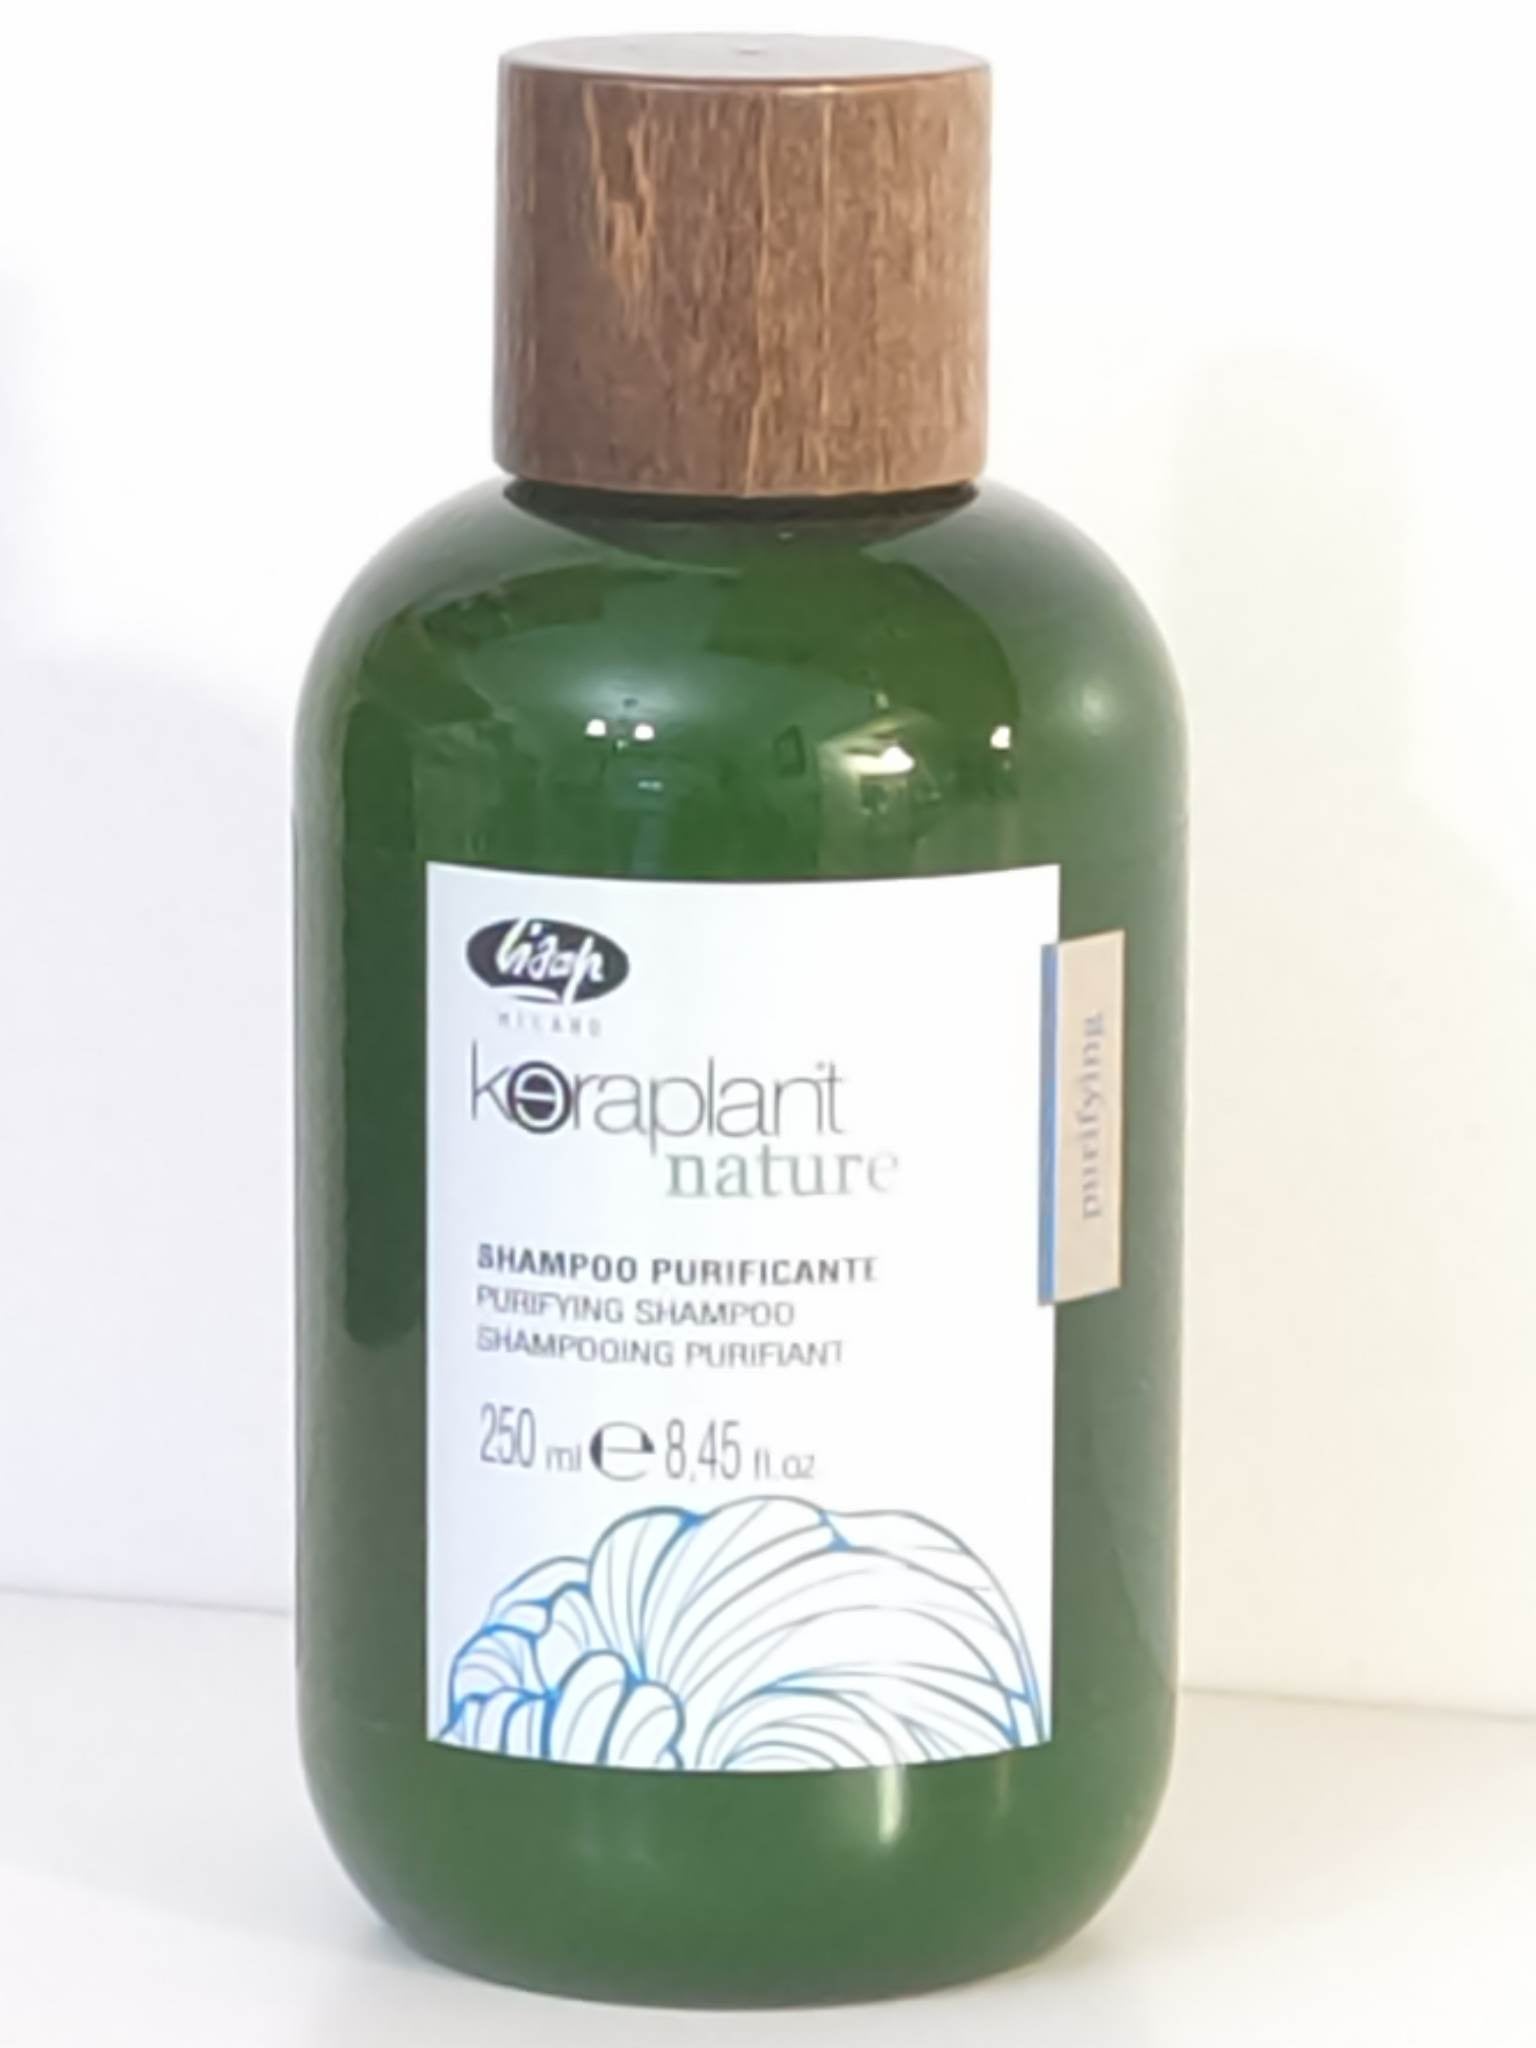 Lisap keraplant nature shampooing purifiant anti-pellicules